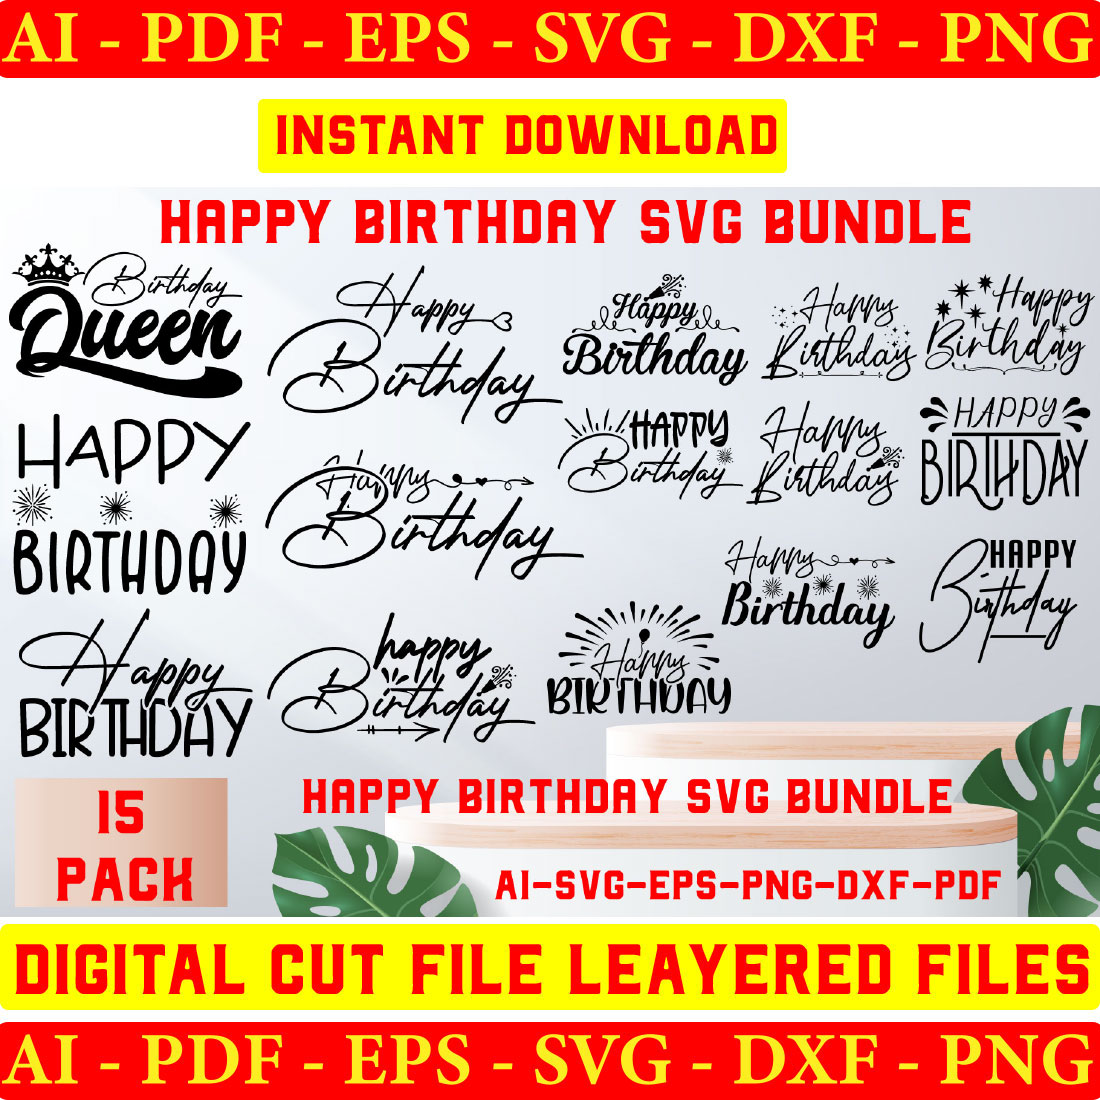 Happy birthday svg bundle hand lettered | birthday svg | birthday party svg | birthday cake svg | birthday party svg png | birthday clipart preview image.